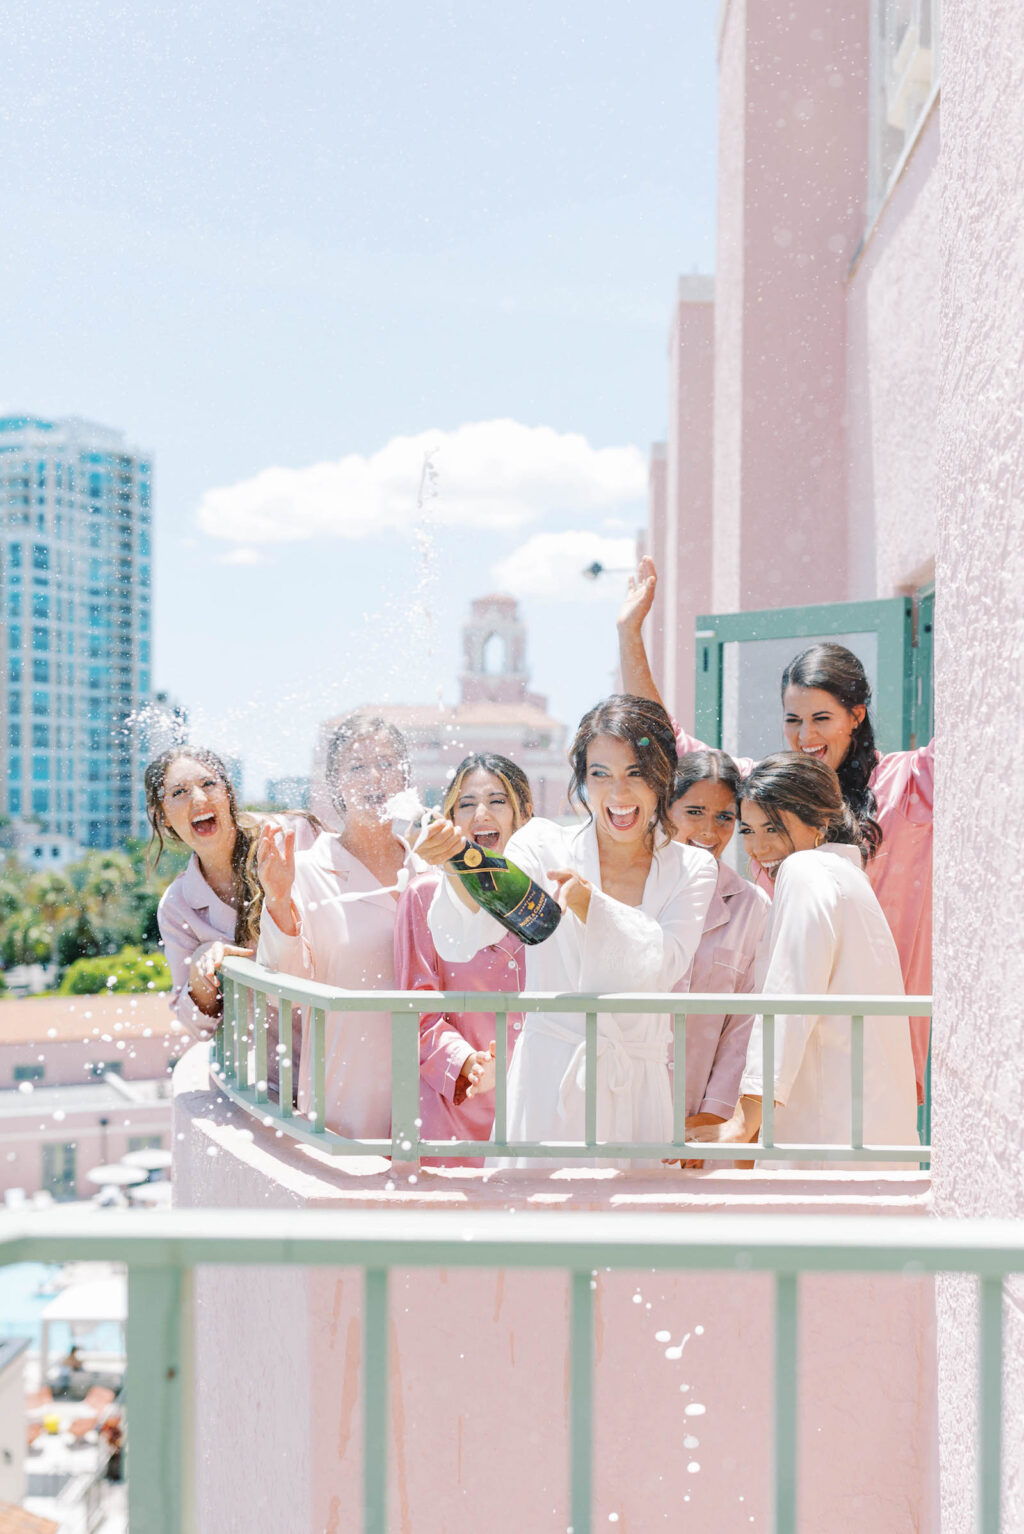 Bride Popping Champagne on Hotel Balcony with Bridesmaids Portrait | St. Petersburg Wedding Venue Vinoy Renaissance